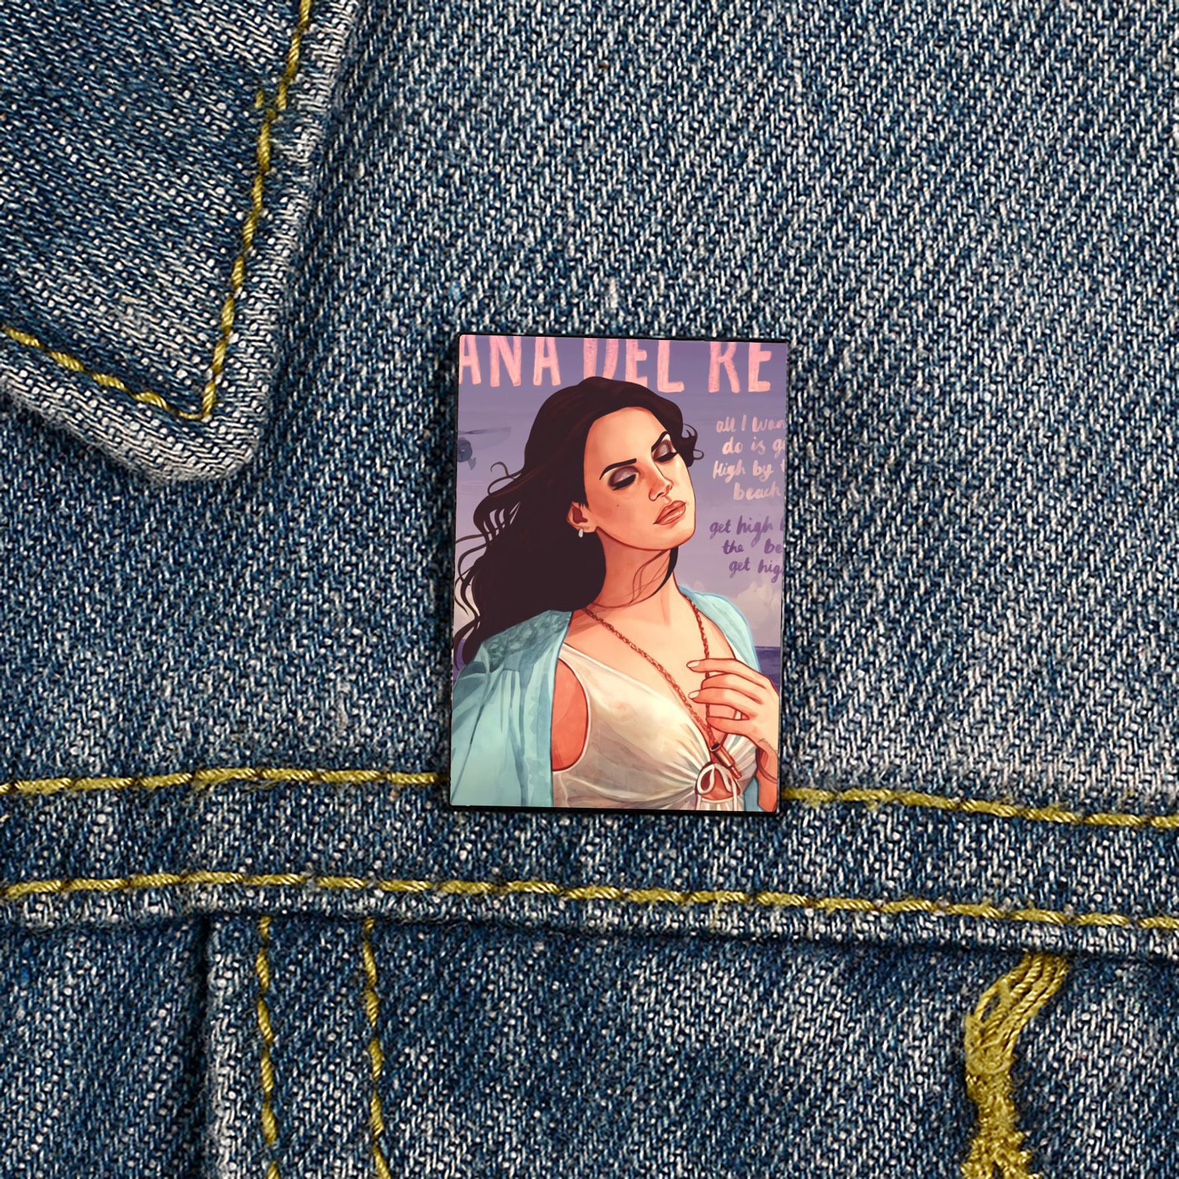 Lana Del Rey Metal Brooch Badge Decoration Pin